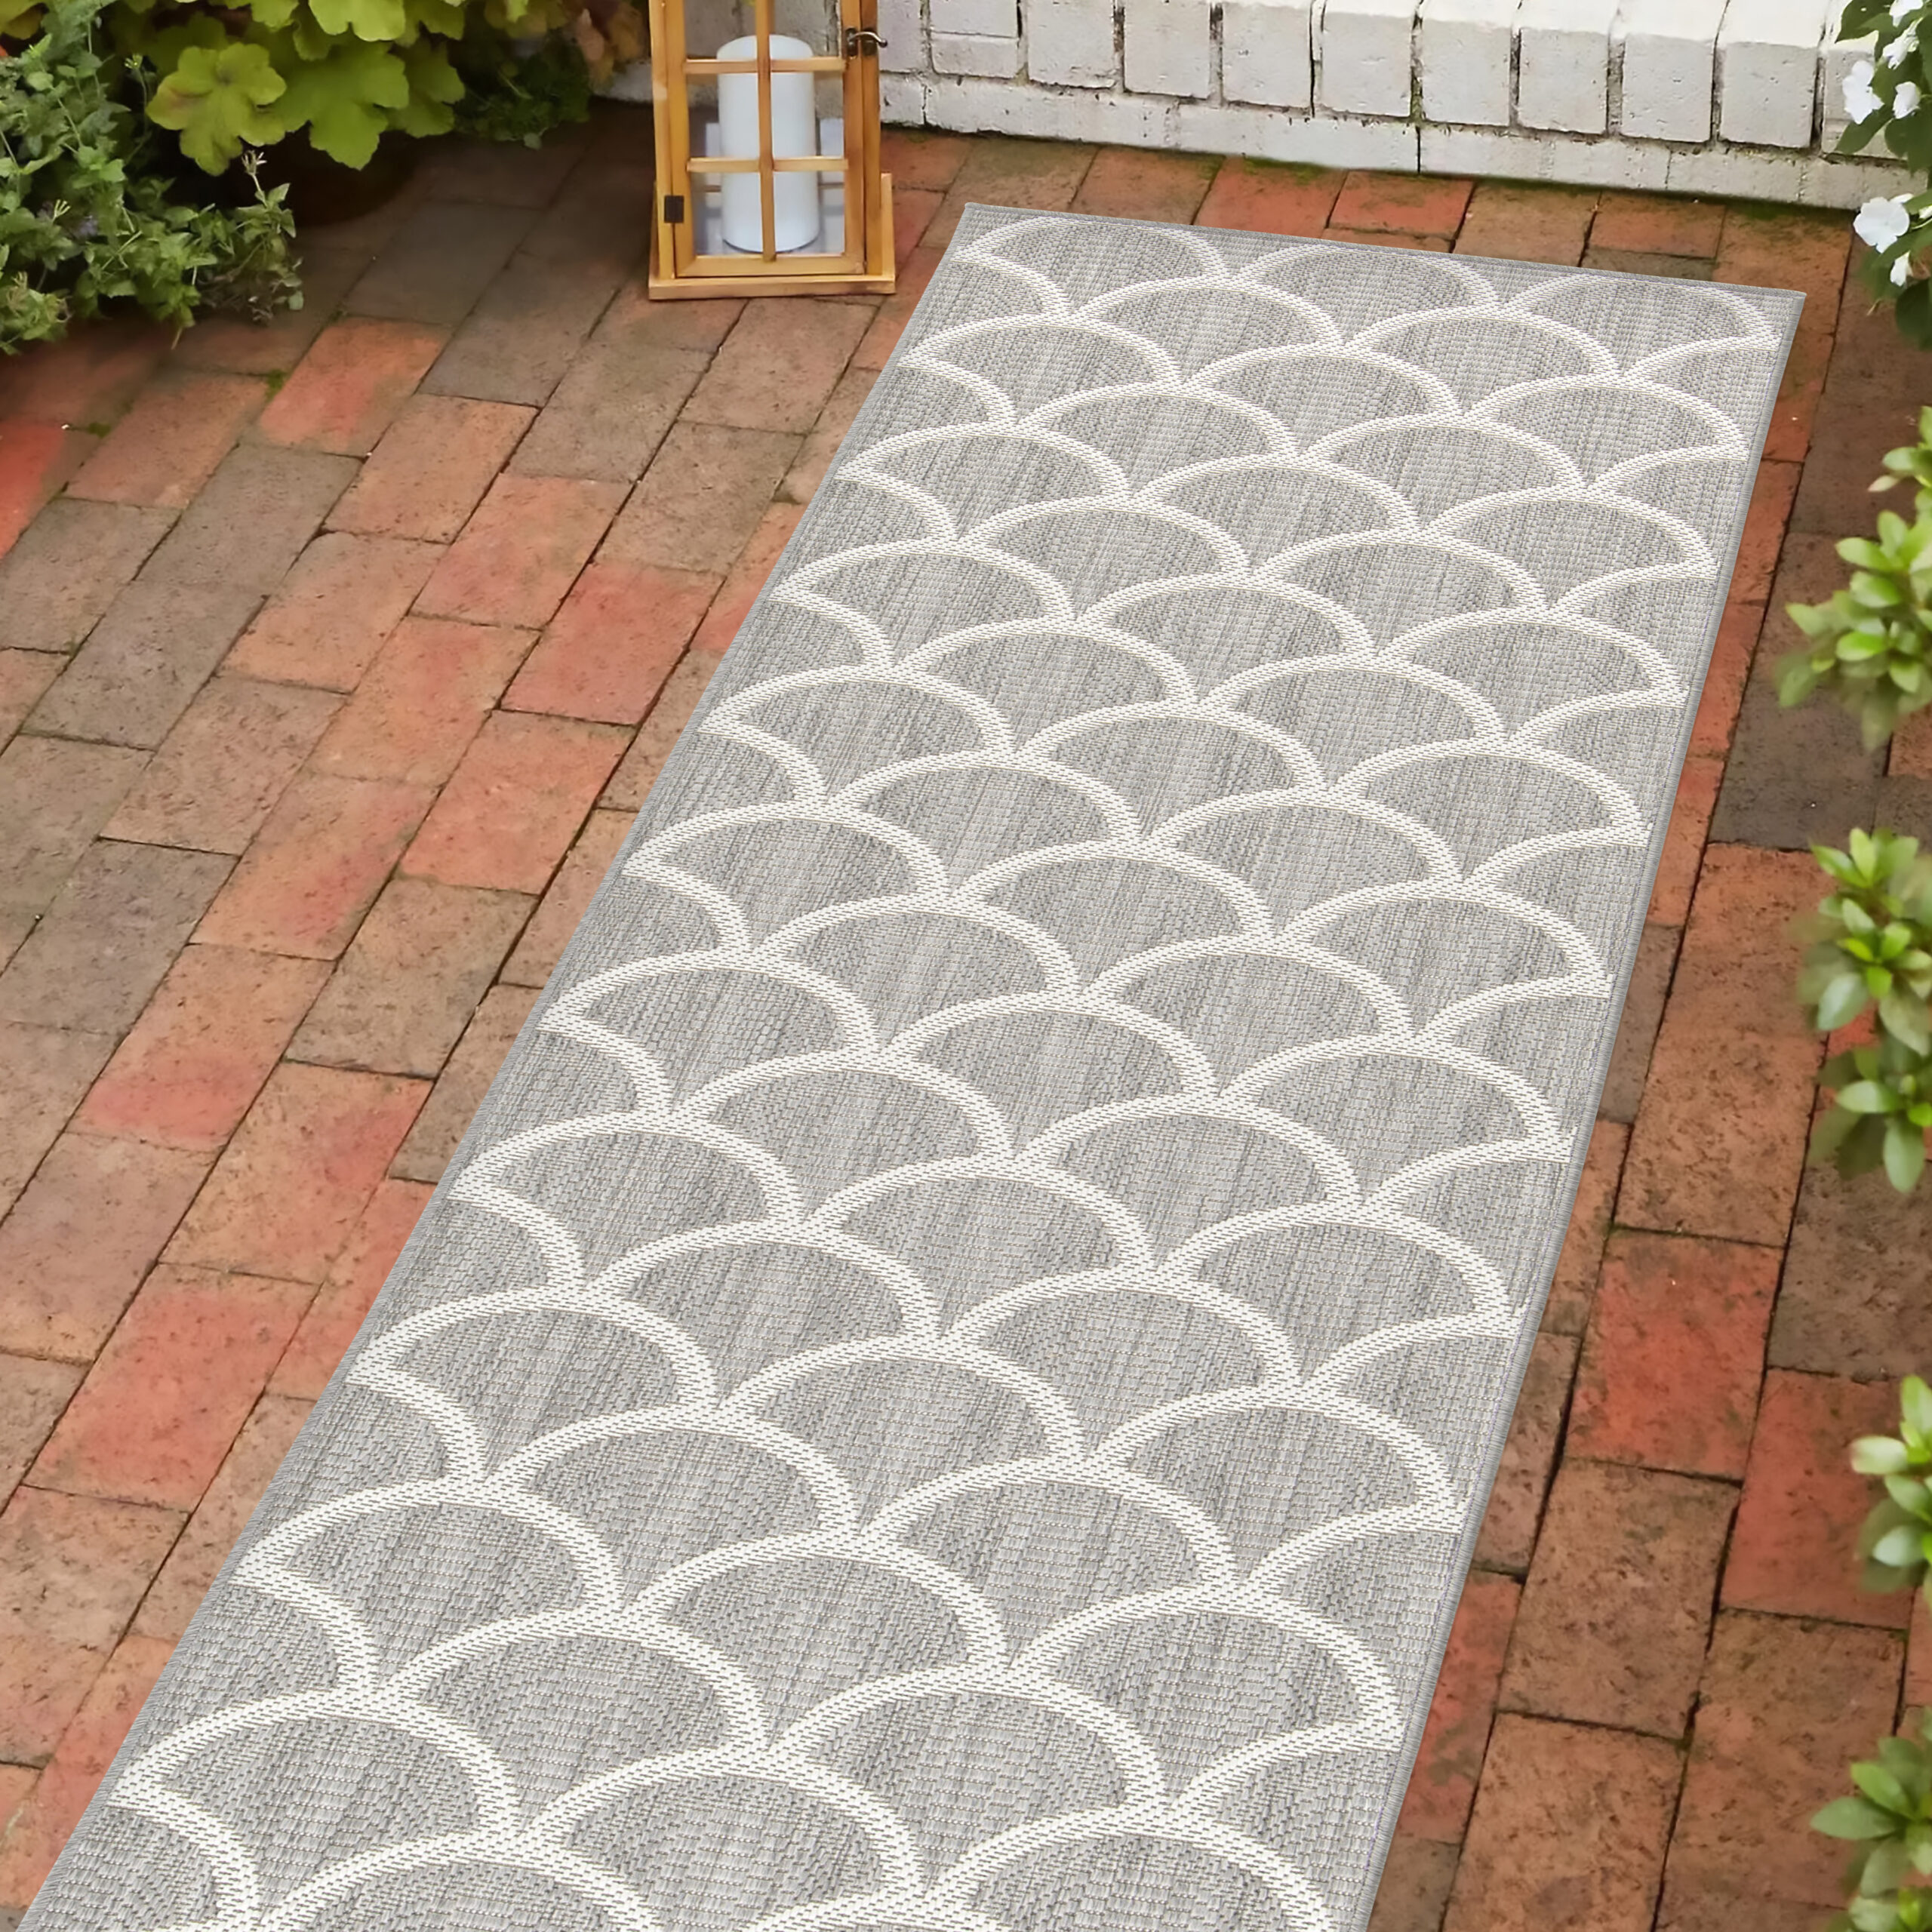 Outdoor area rug carpet textile texture design.